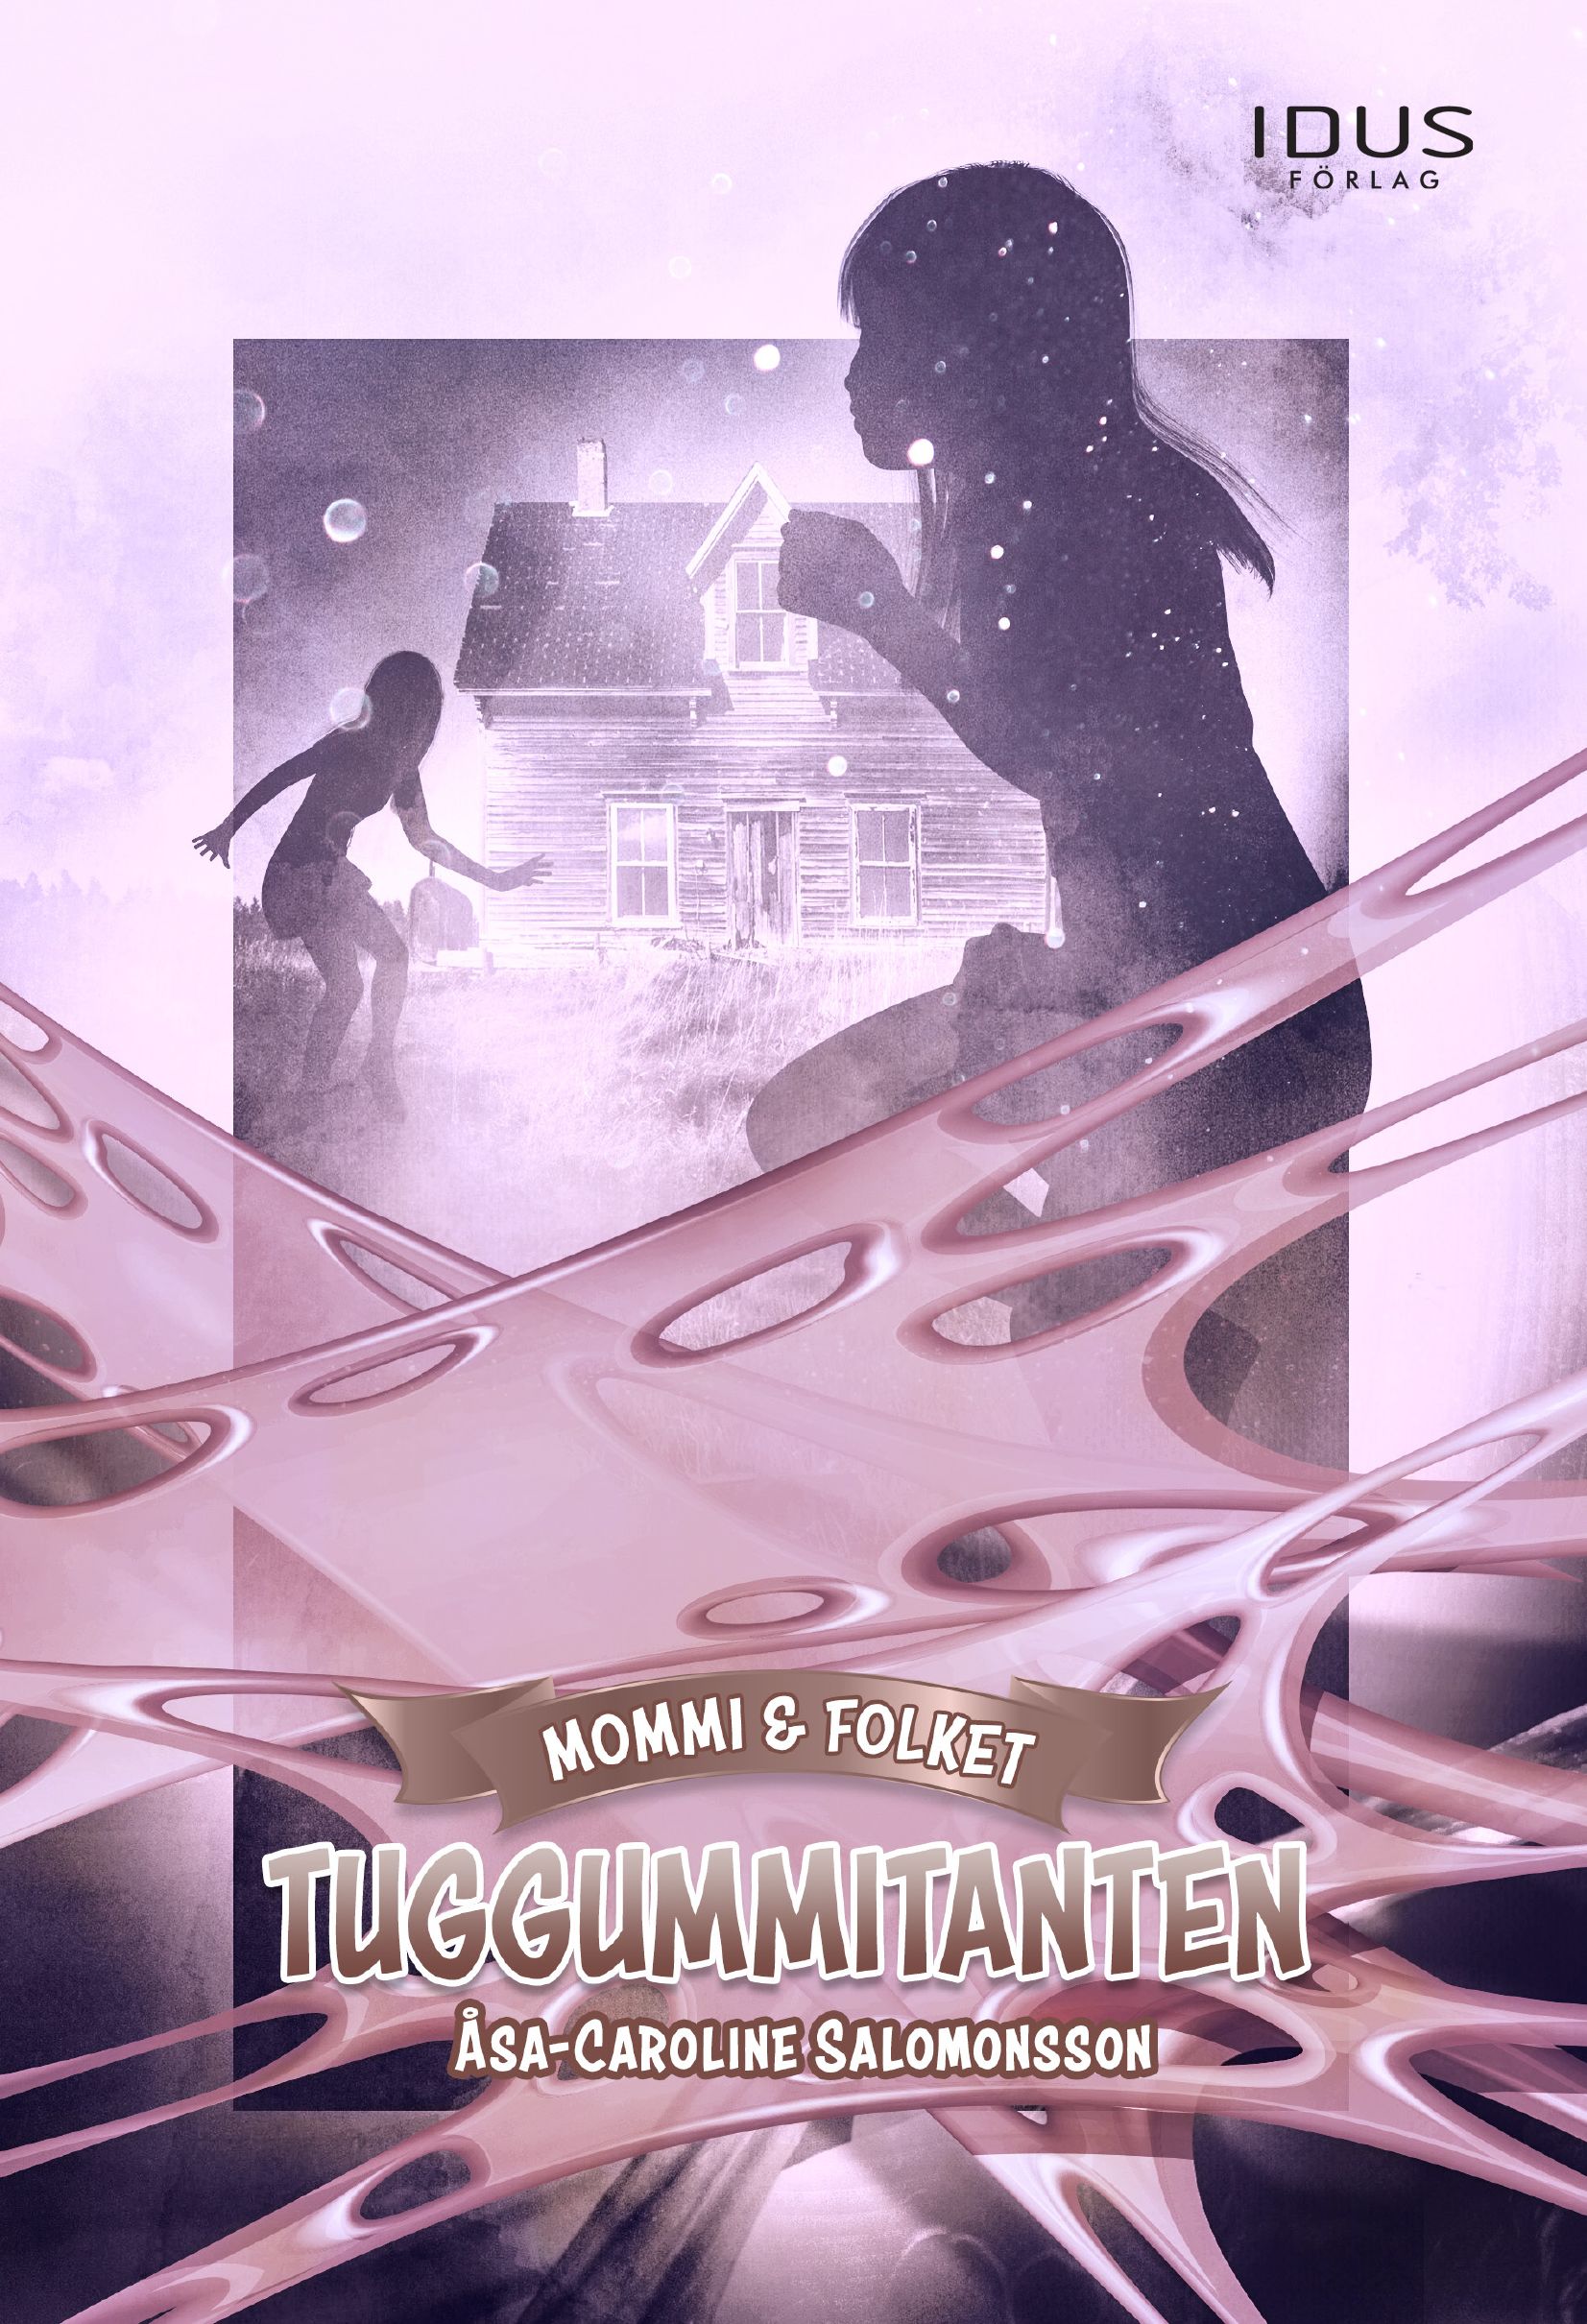 Tuggummitanten, e-bog af Åsa-Caroline Salomonsson